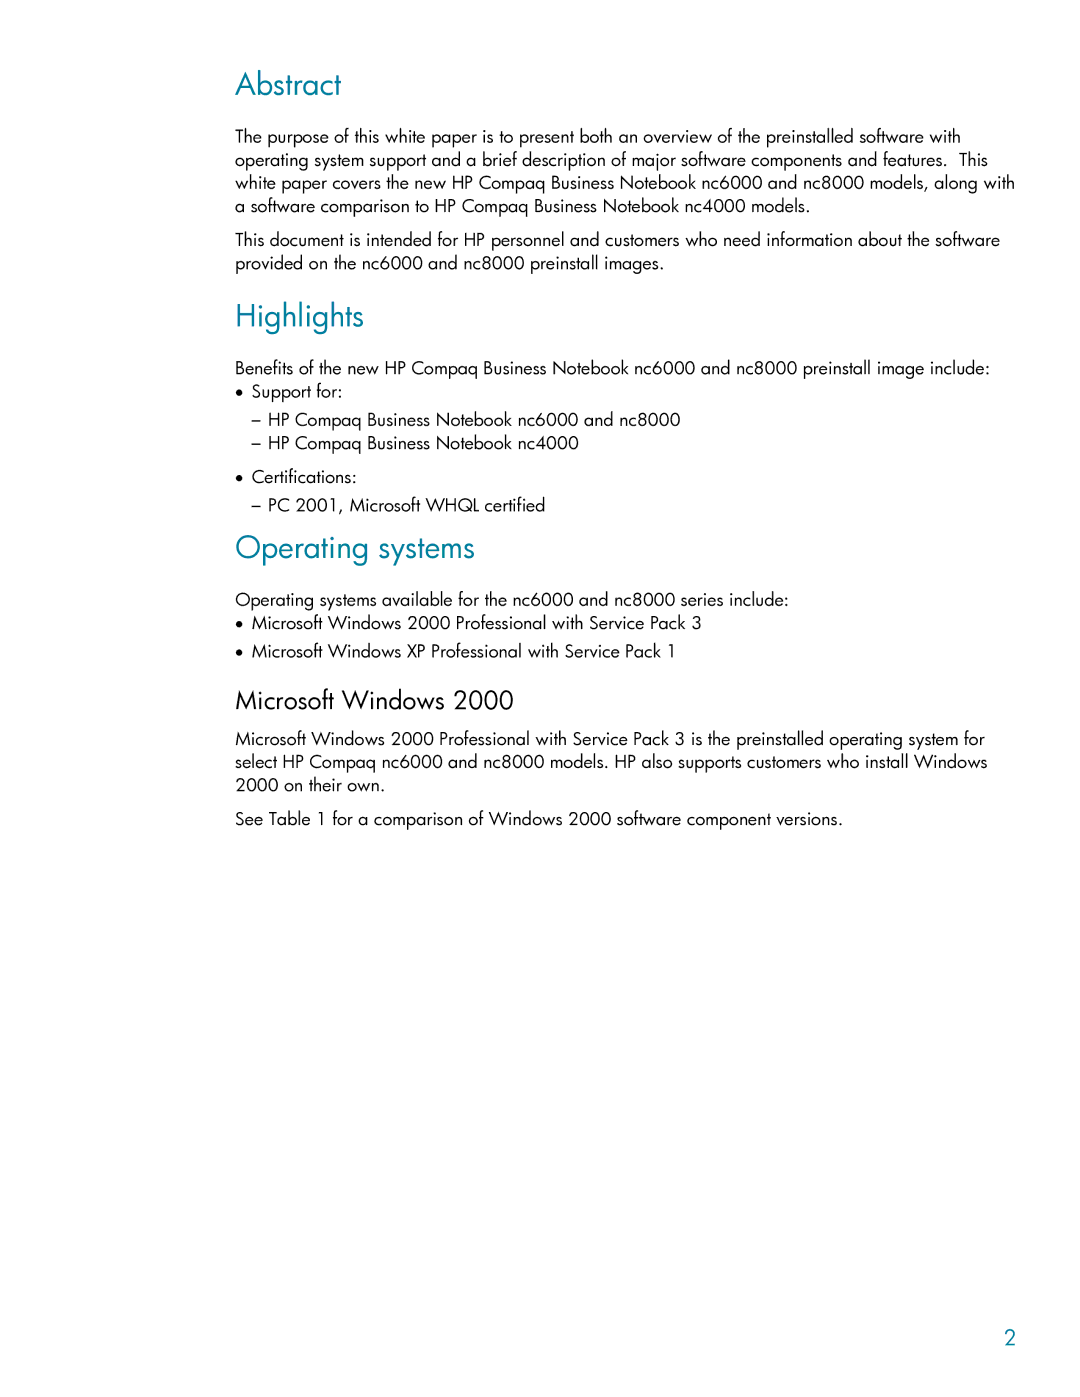 HP nc8000 manual Abstract, Highlights, Operating systems, Microsoft Windows 